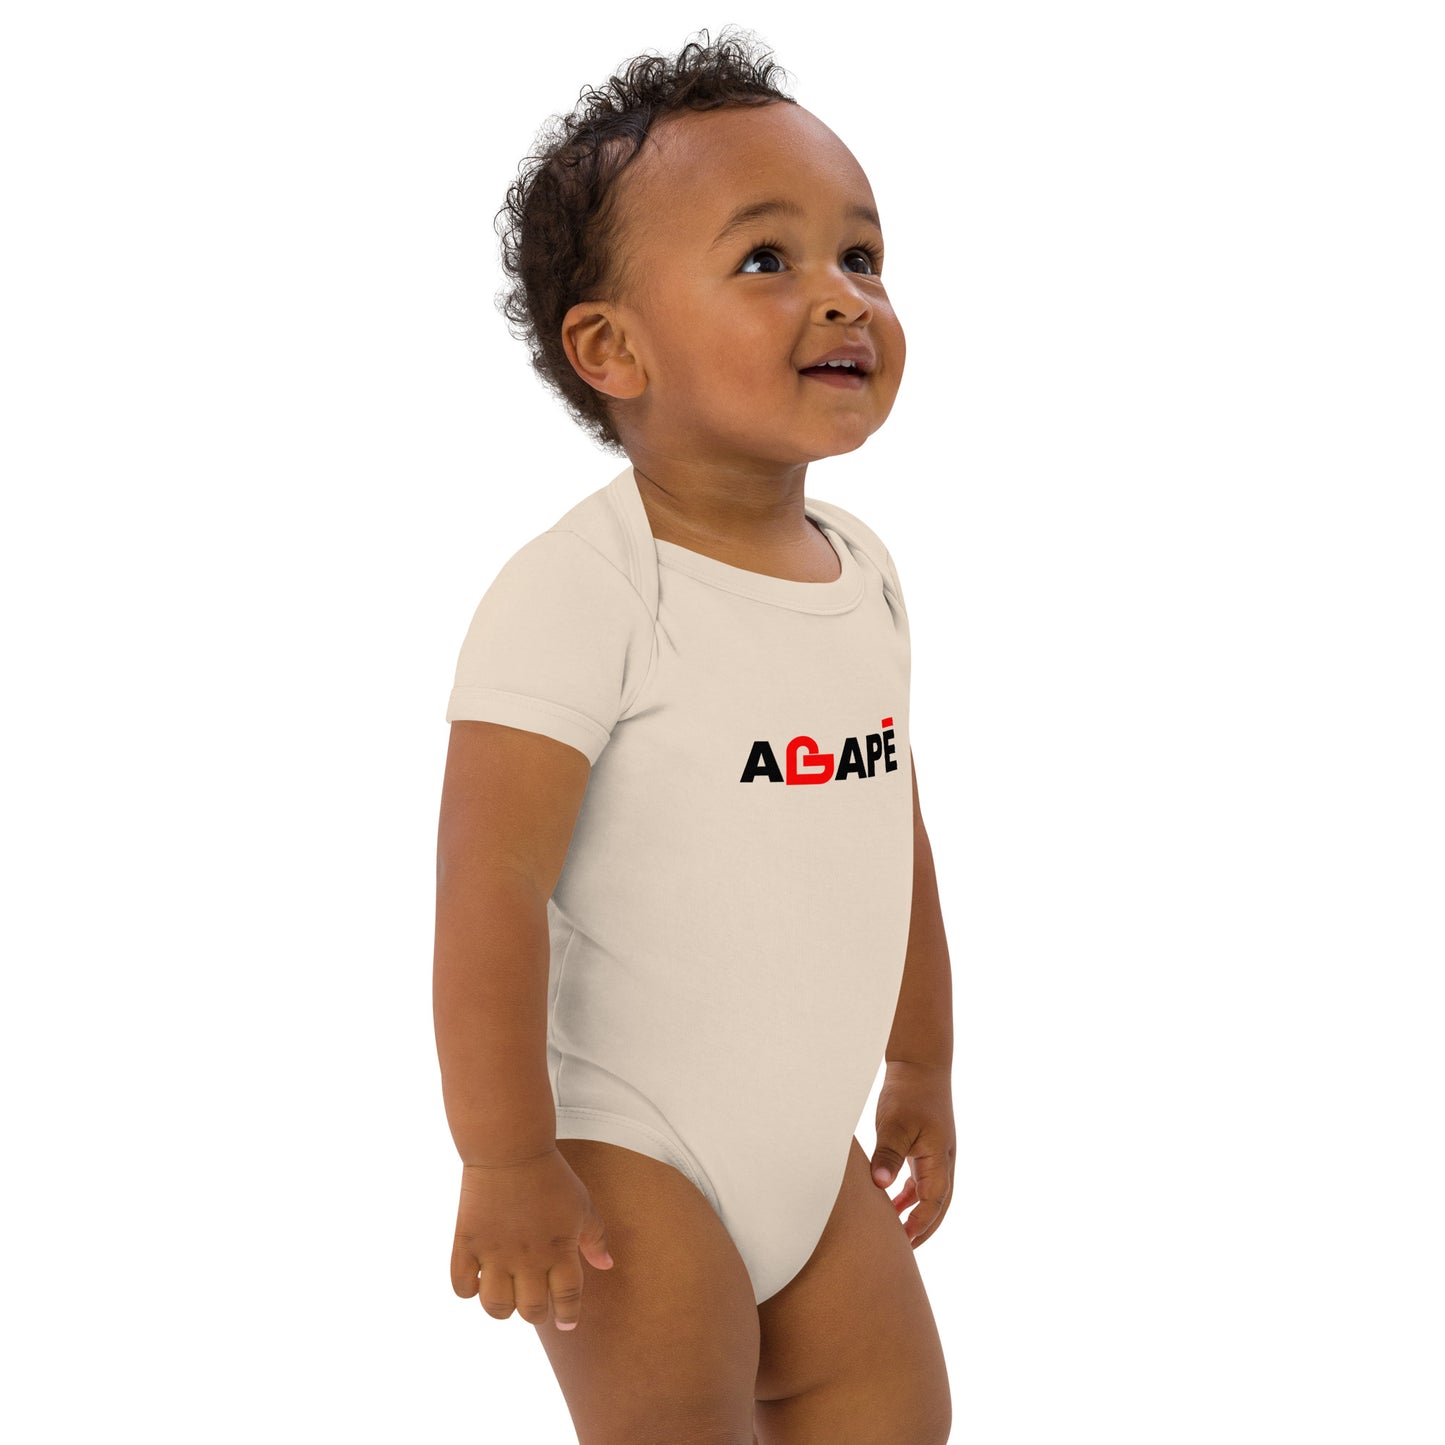 Agape Organic cotton baby bodysuit